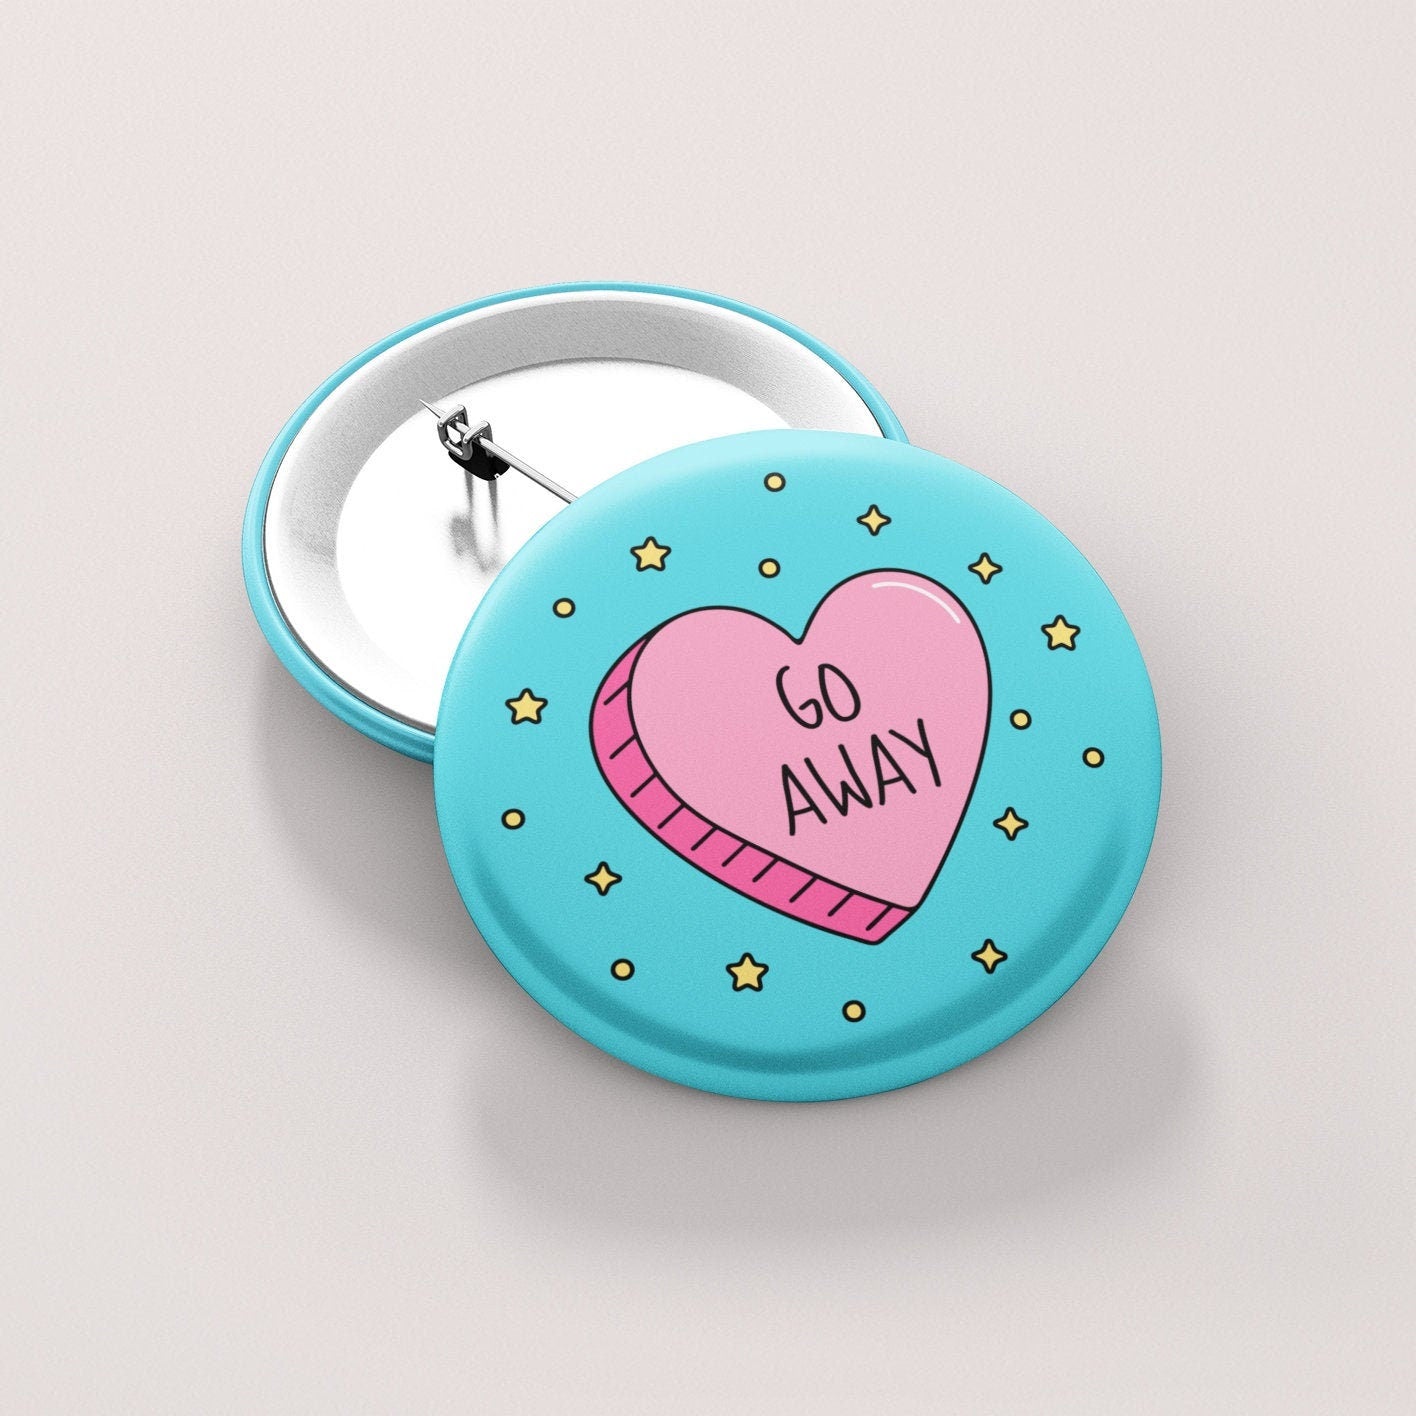 Go Away Badge Pin | No Talking - Introvert Button Badge - Shy Badge - Leave Me Alone -Cute Button Badge